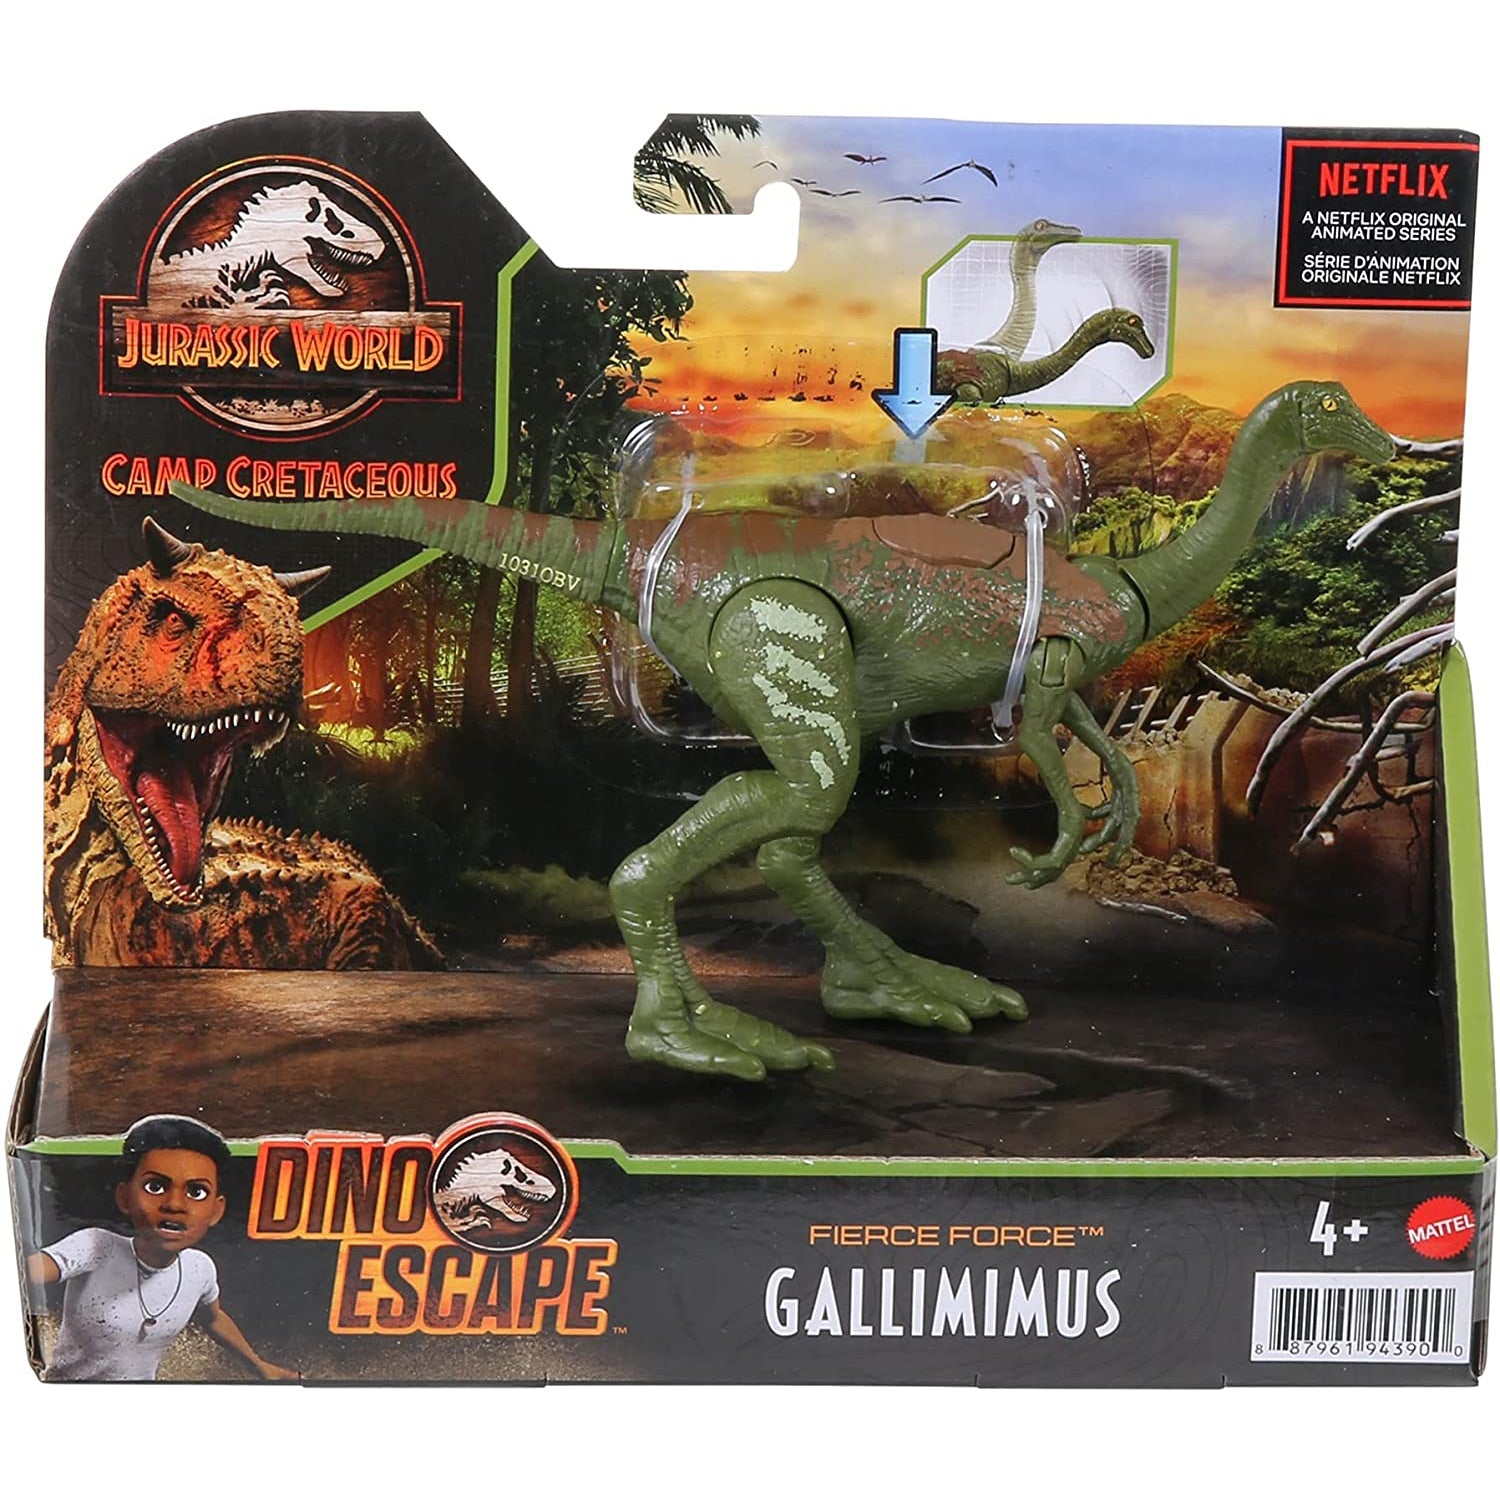 Jurassic World Camp Cretaceous Fierce Force Gallimimus